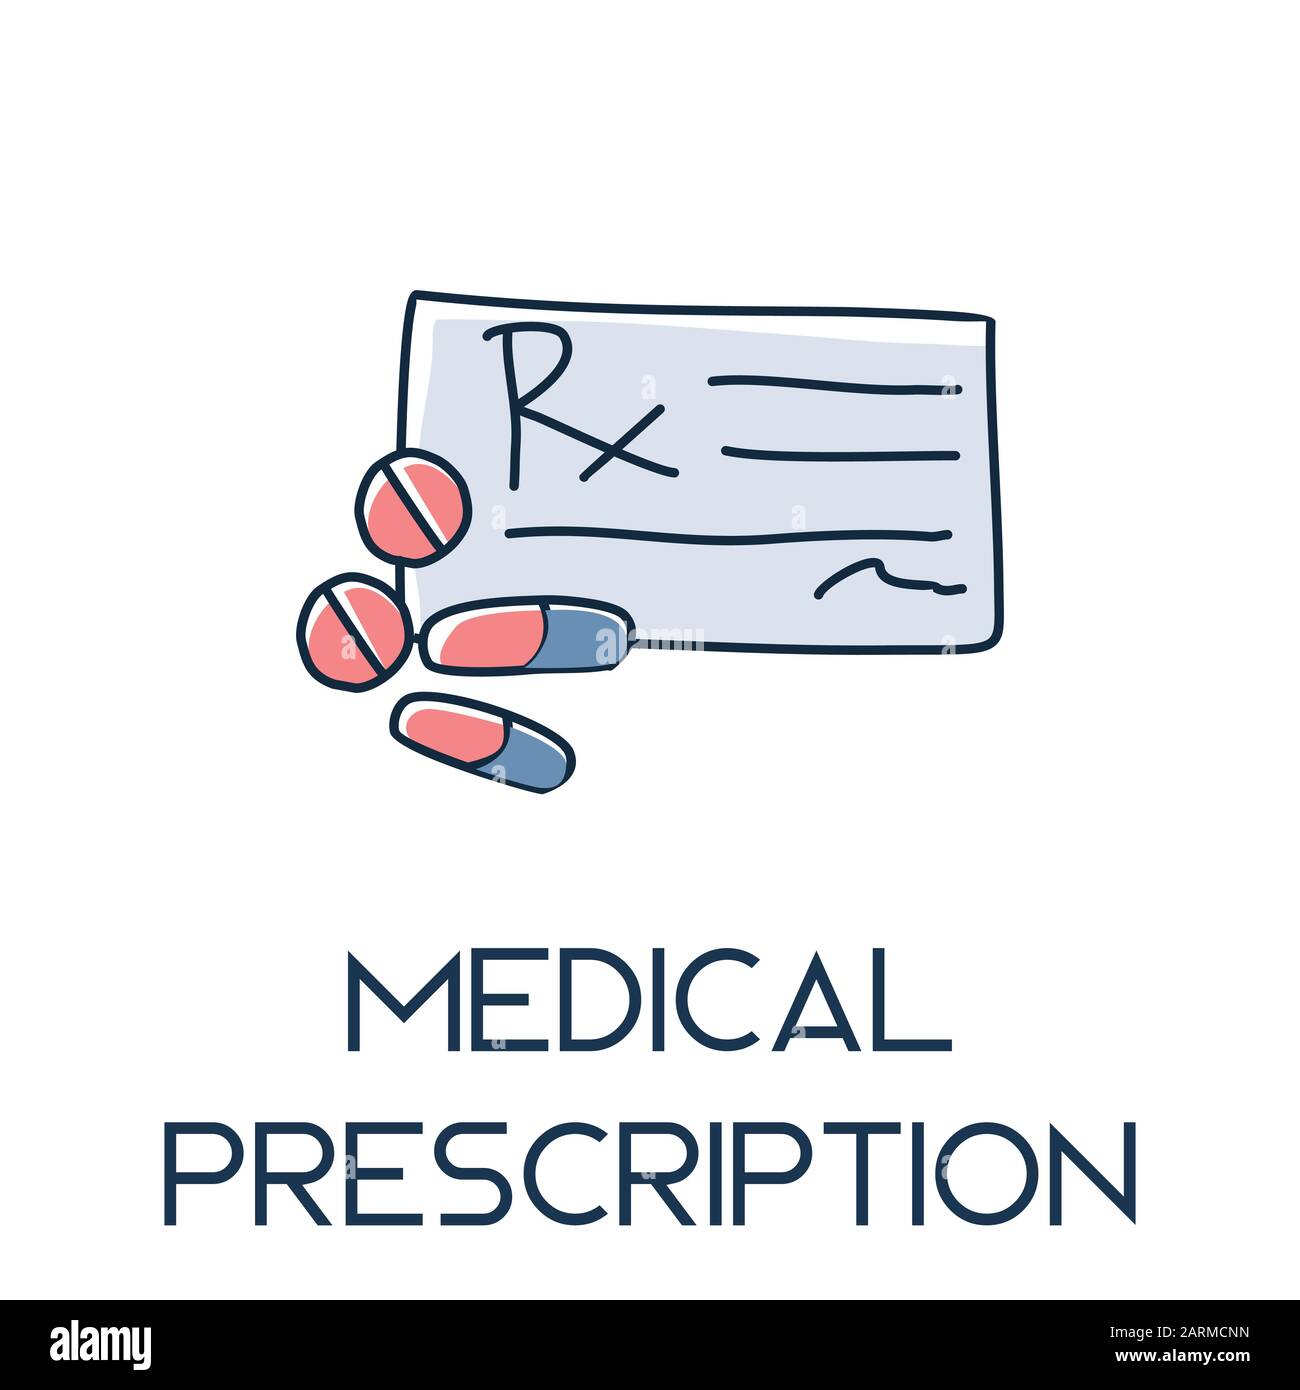 medical prescription minimalist hand drawn medic flat icon illustrartion Stock Vector